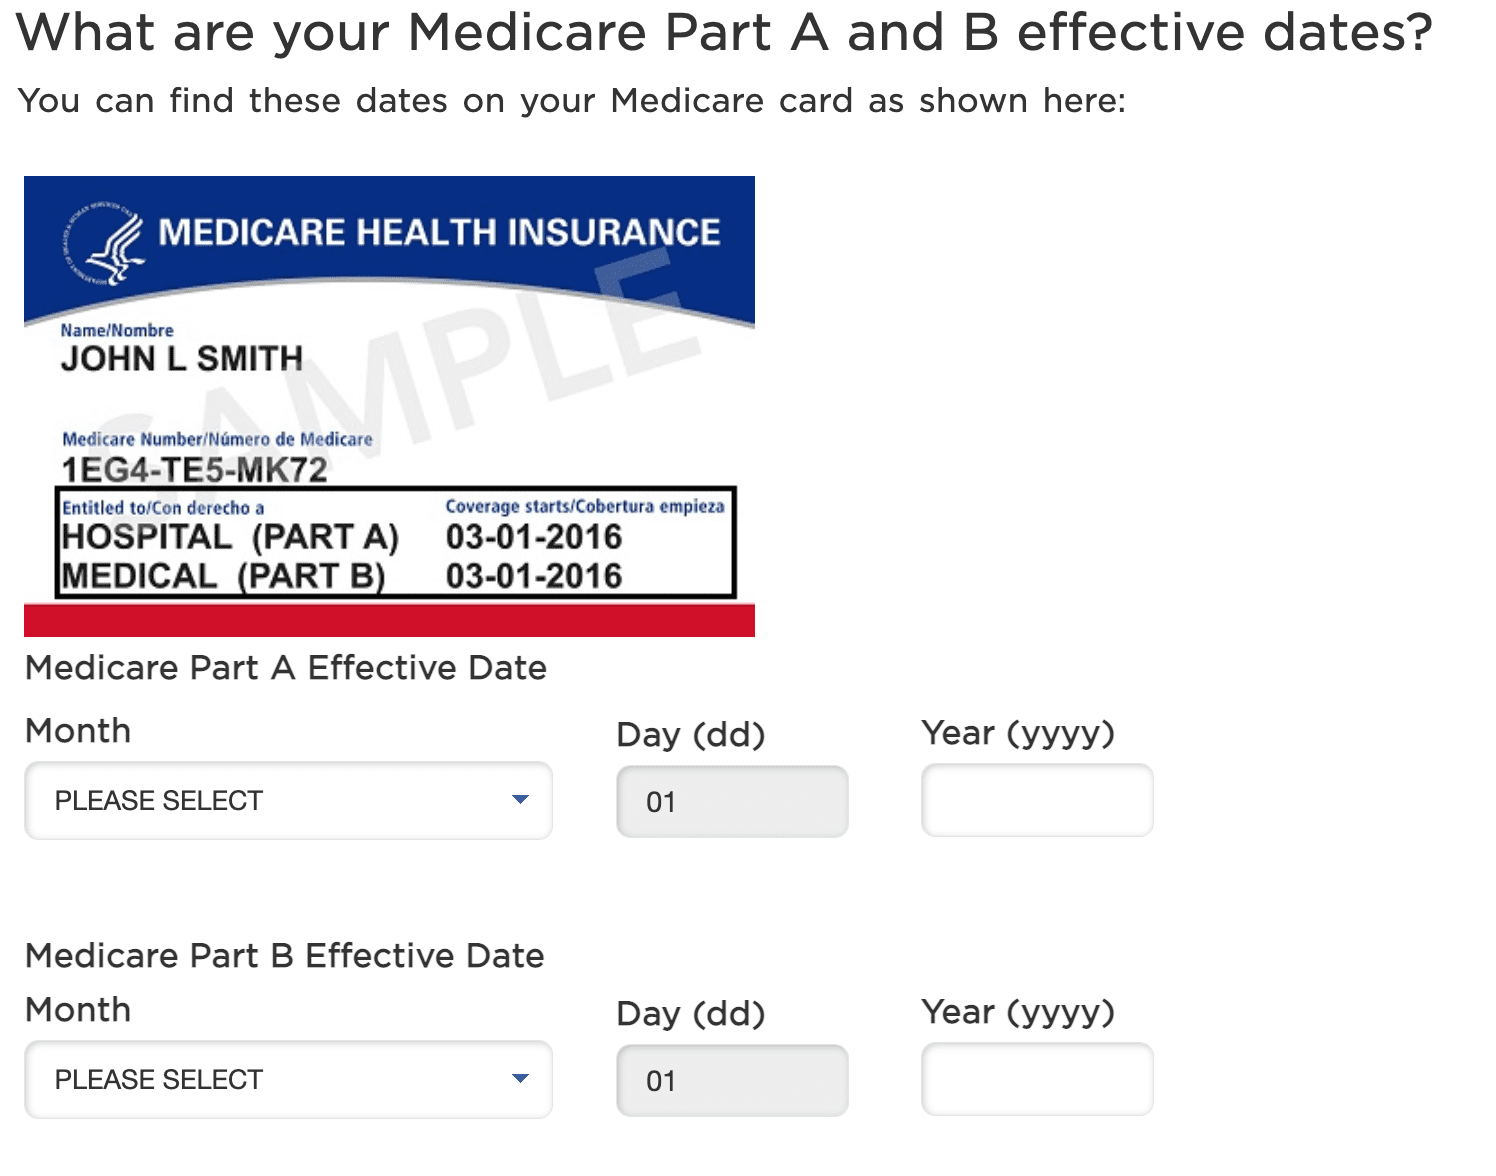 Entering your Medicare information on Cigna's website